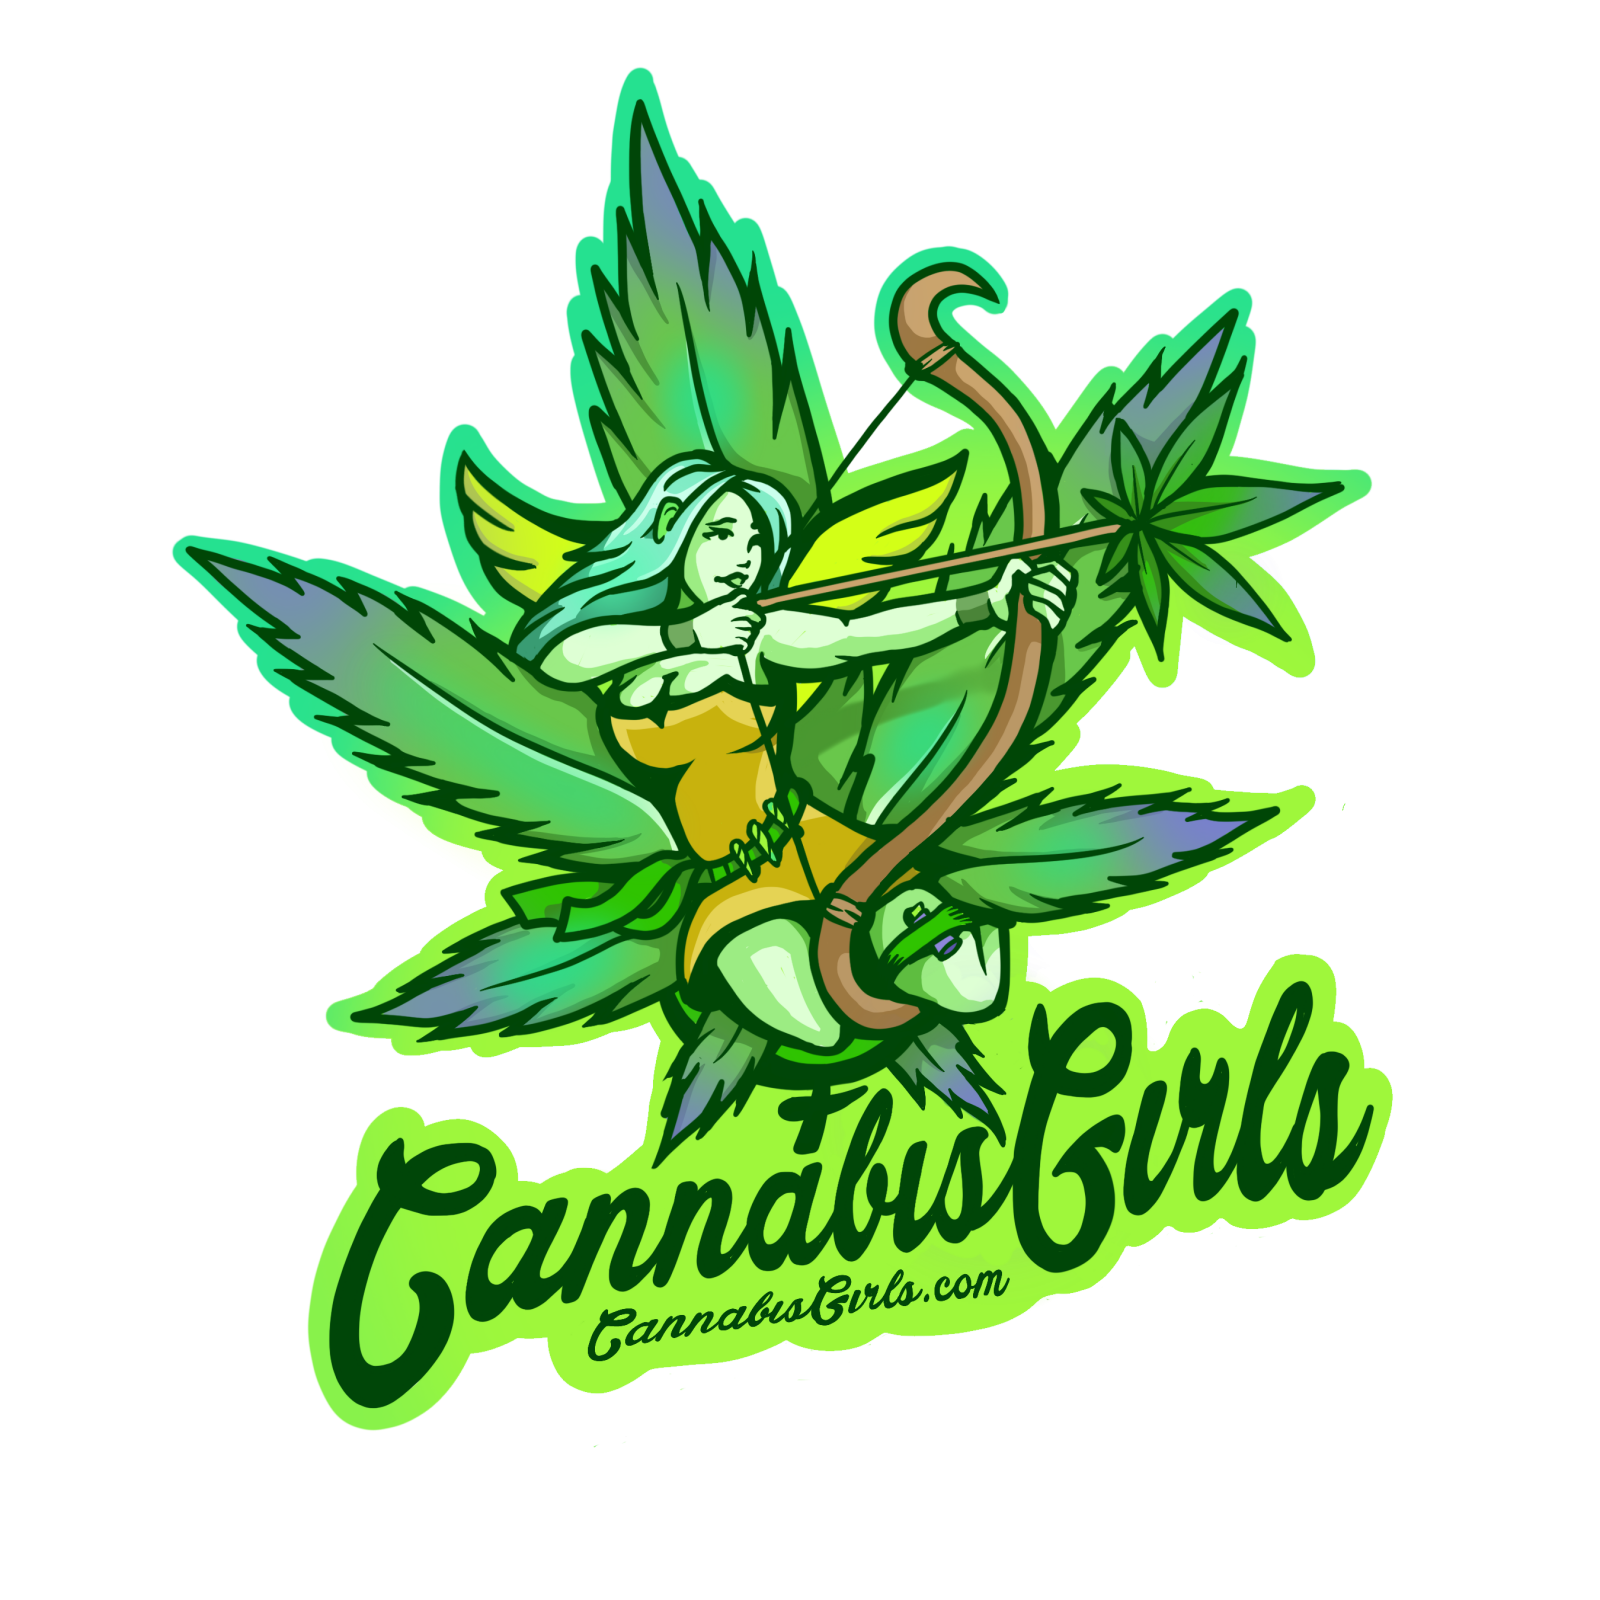 CannabisGirls.com